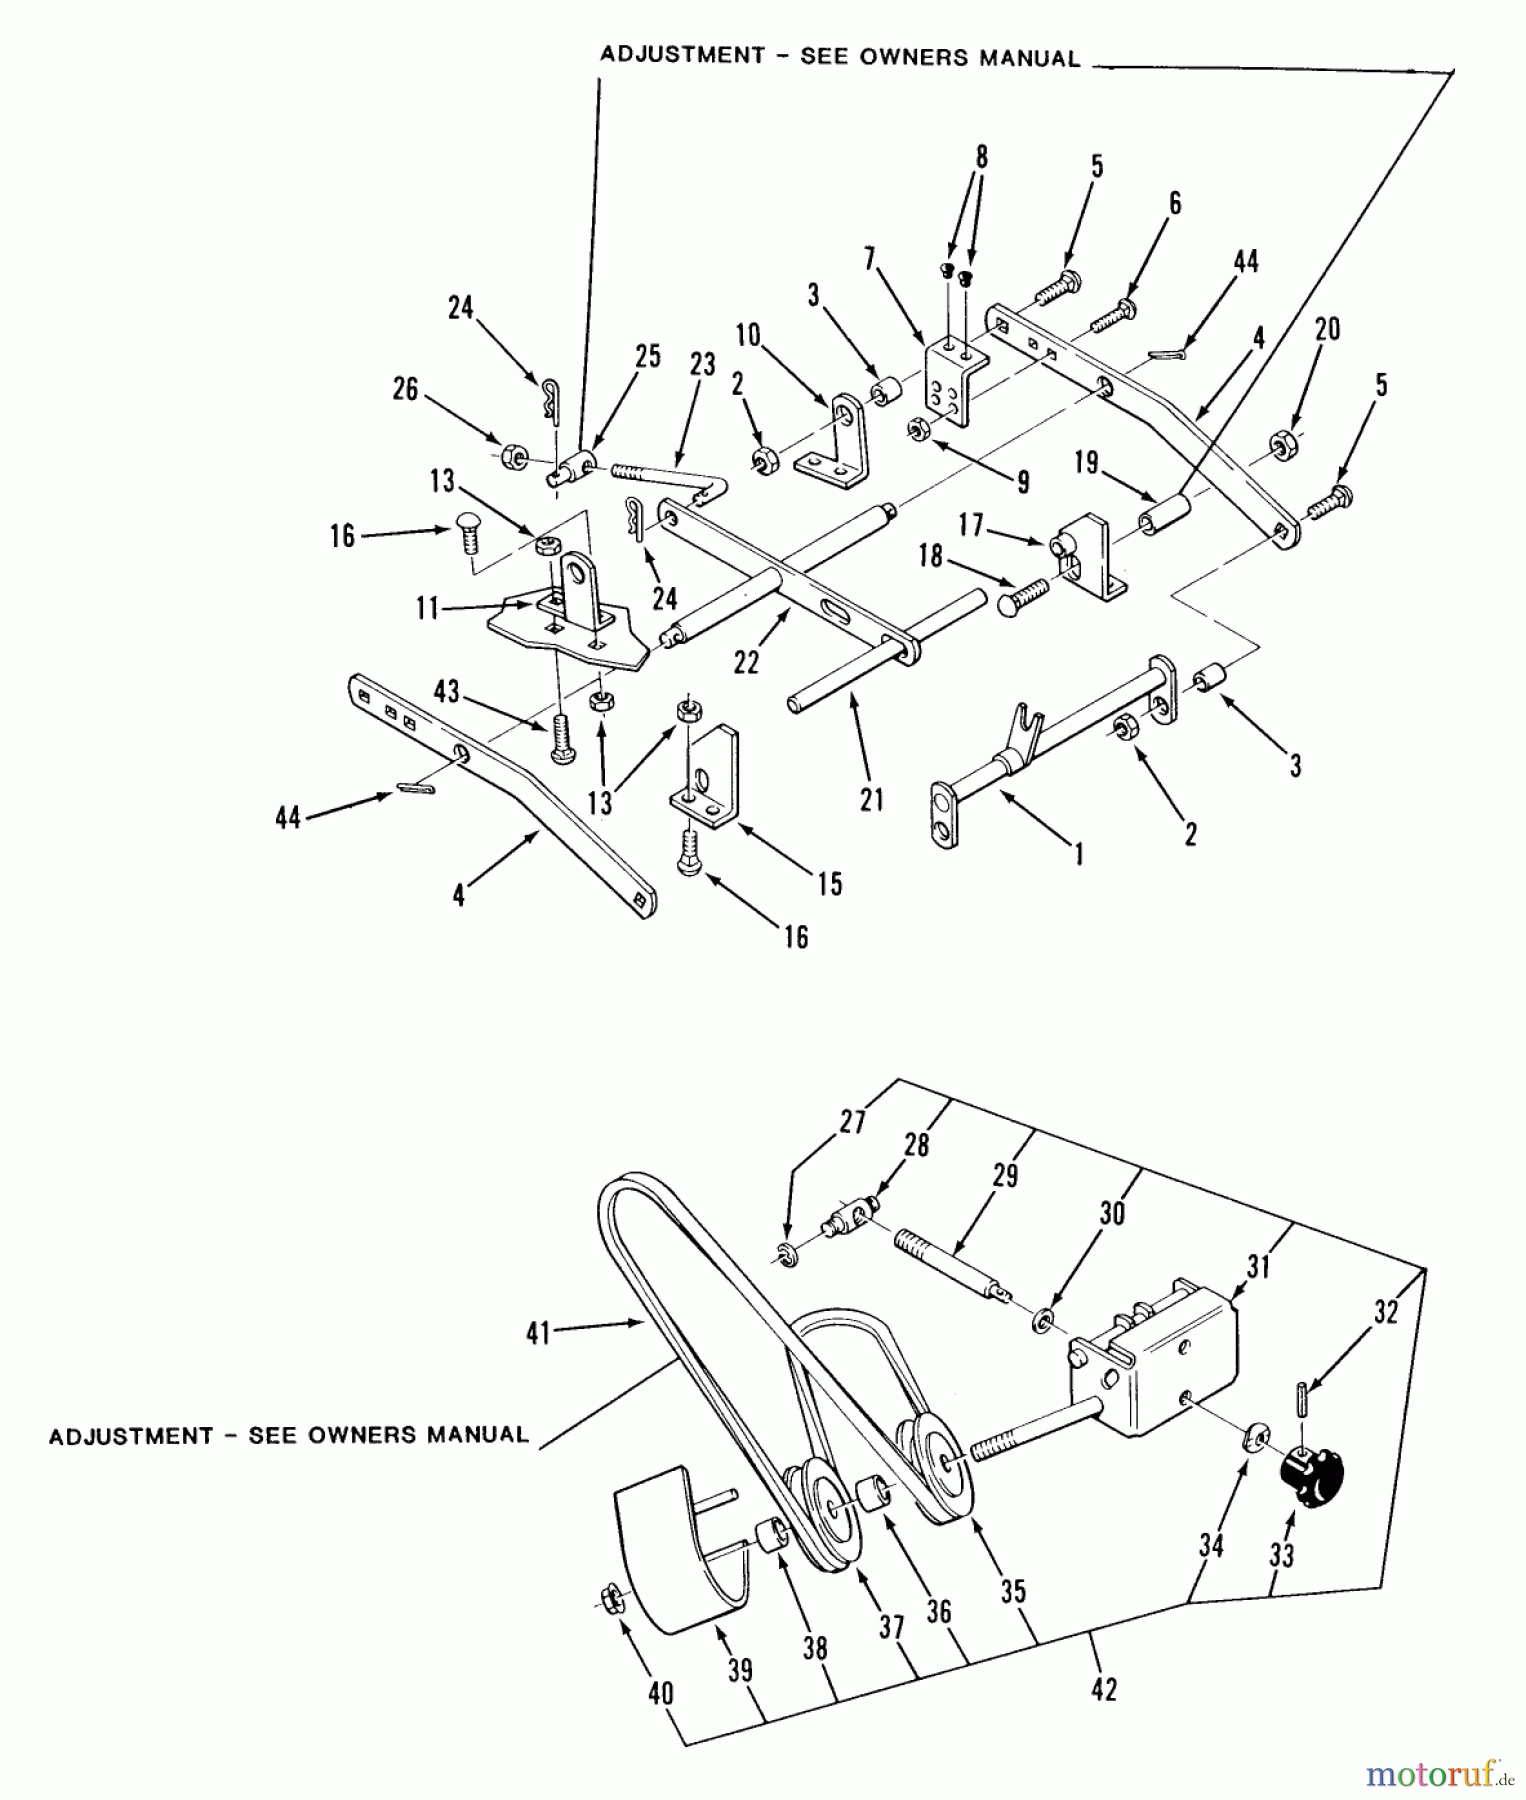  Toro Neu Mowers, Deck Assembly Only E5-36MR01 - Toro 36